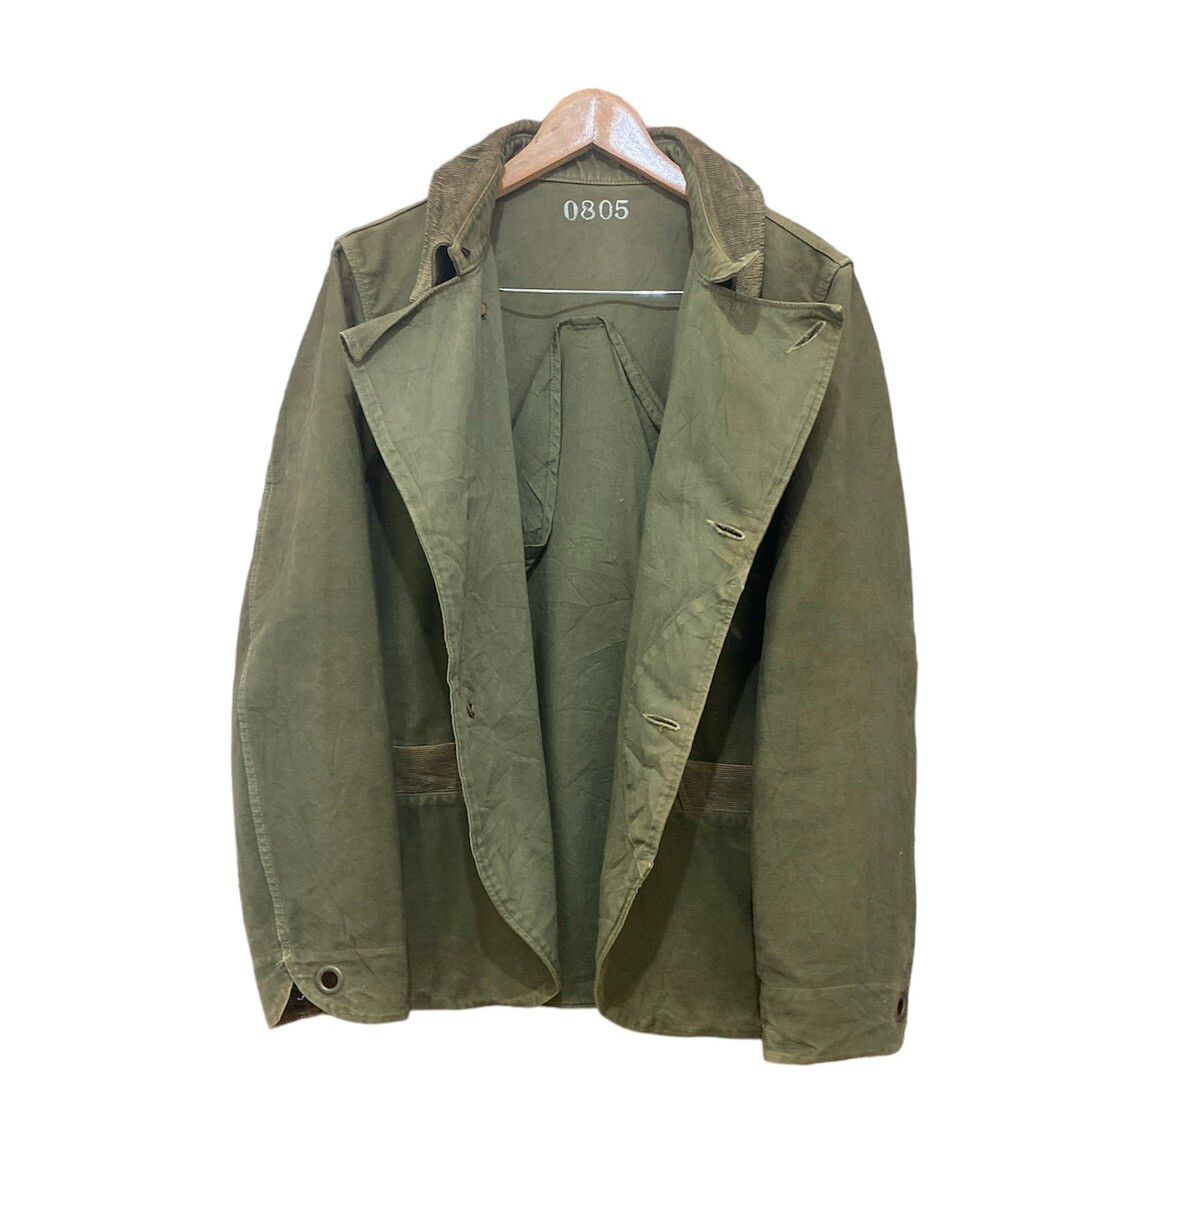 Kapital Military Rare Design Fashion Jacket - 3